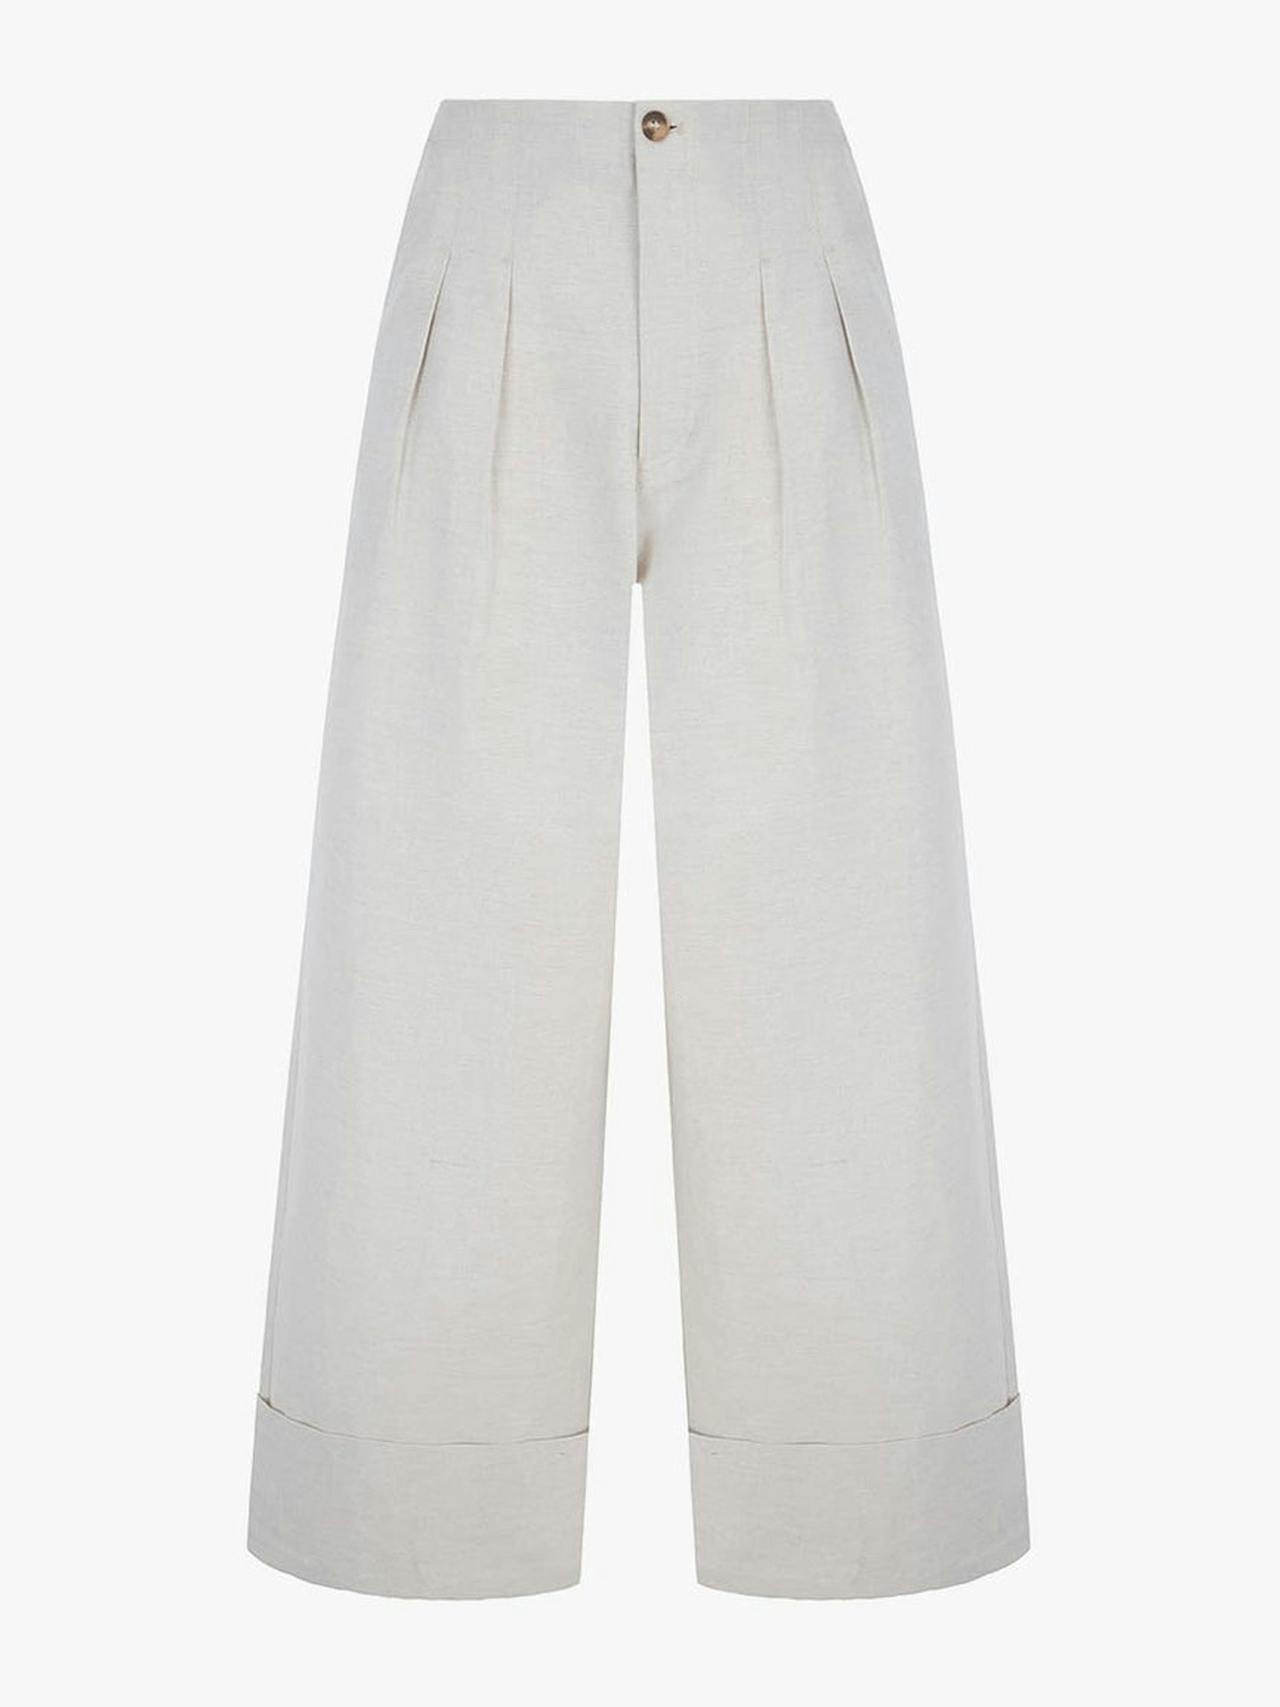 Fresh linen trousers